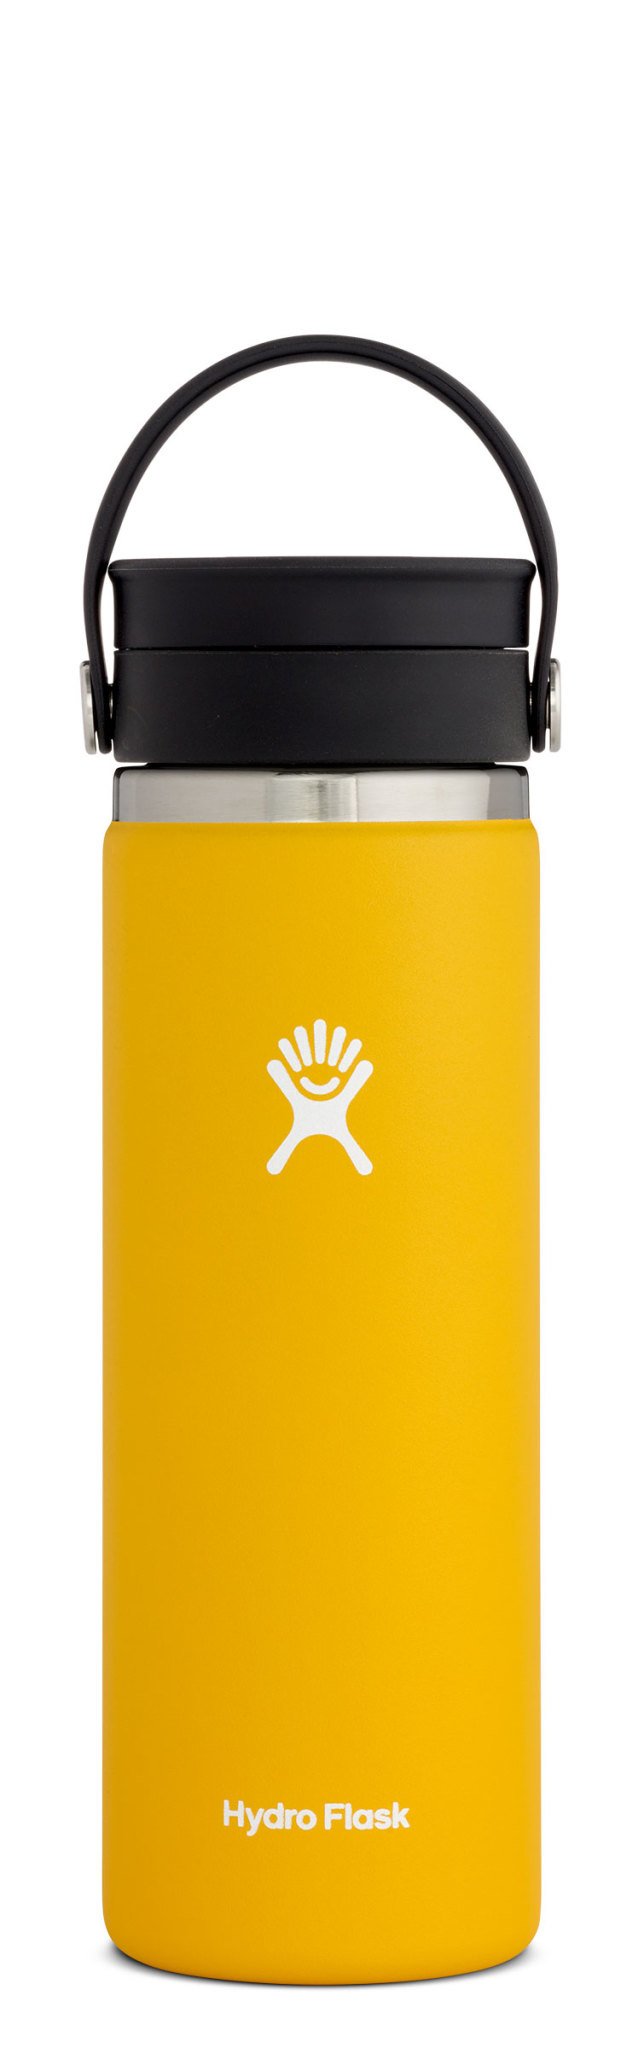 Hydro Flask 20 oz Coffee - Alpin Action